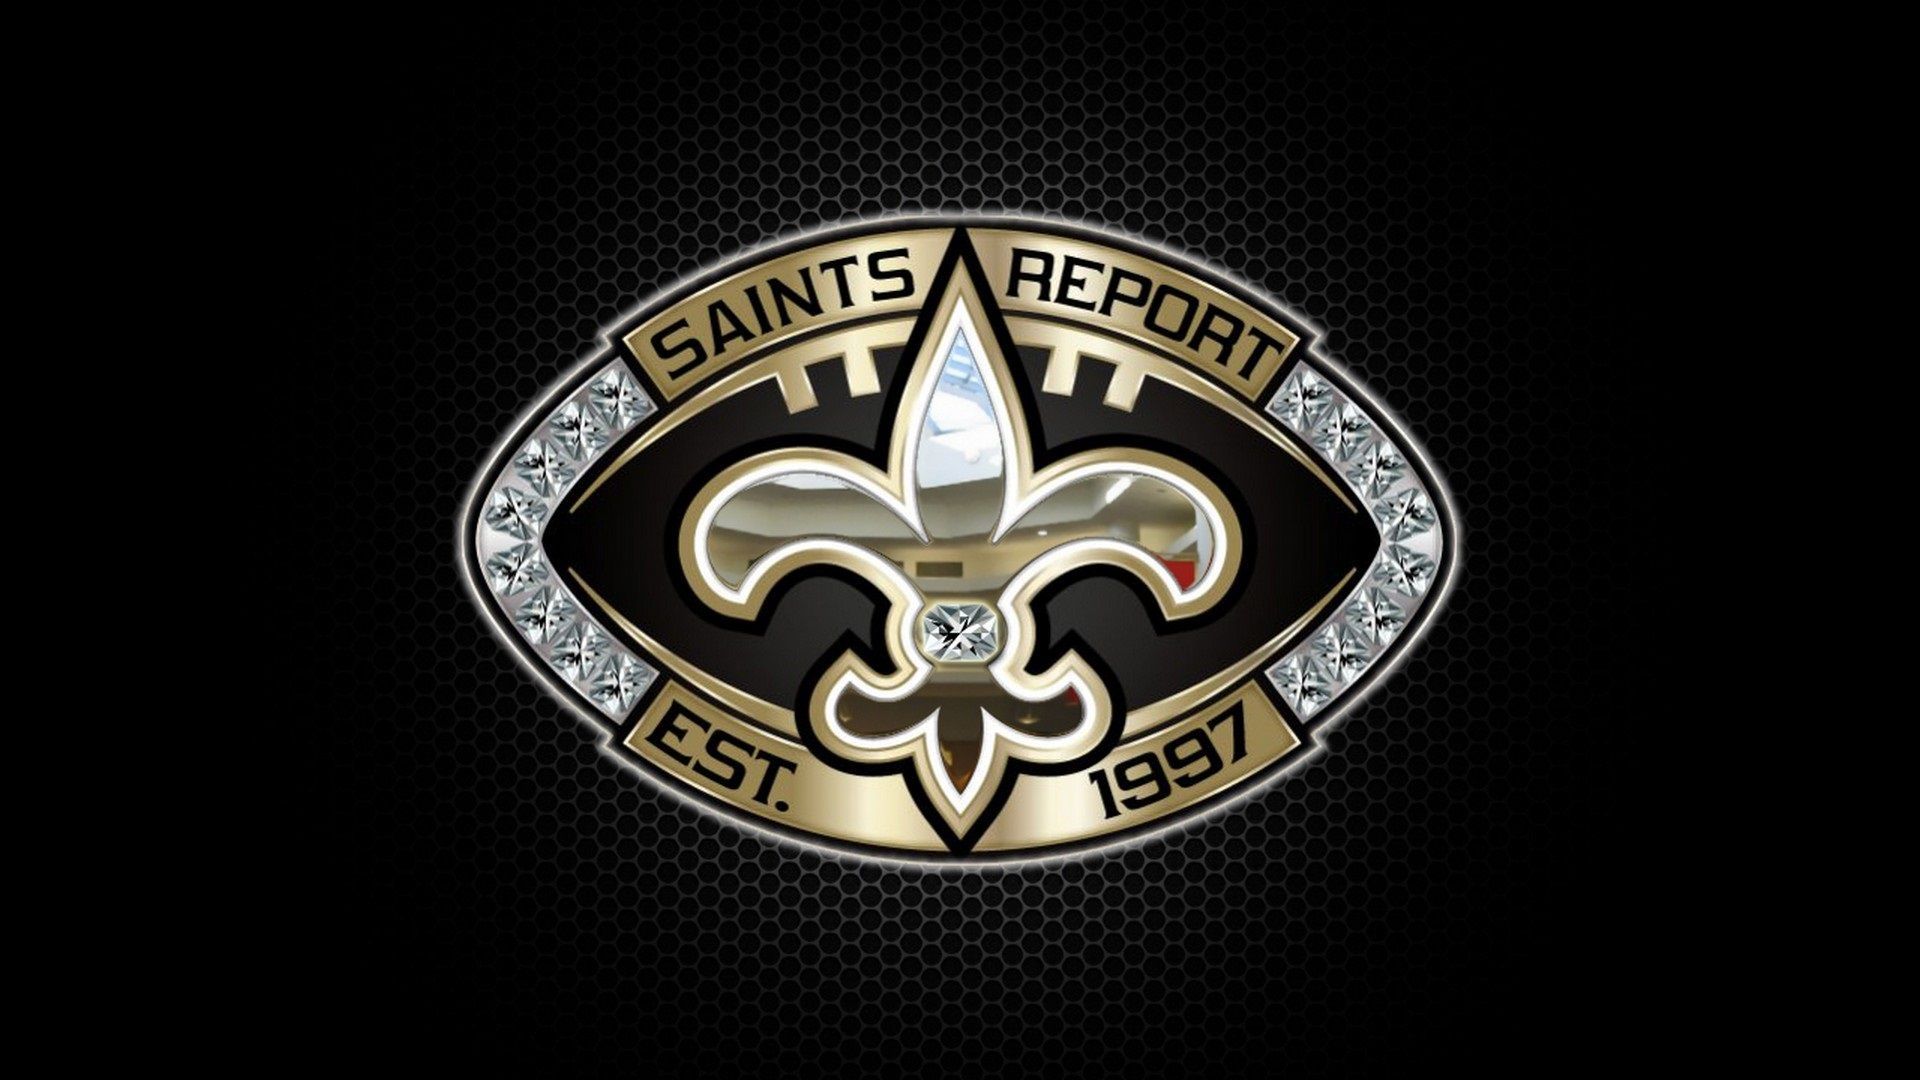 New Orleans Saints NFL Desktop Wallpaper. Football wallpaper